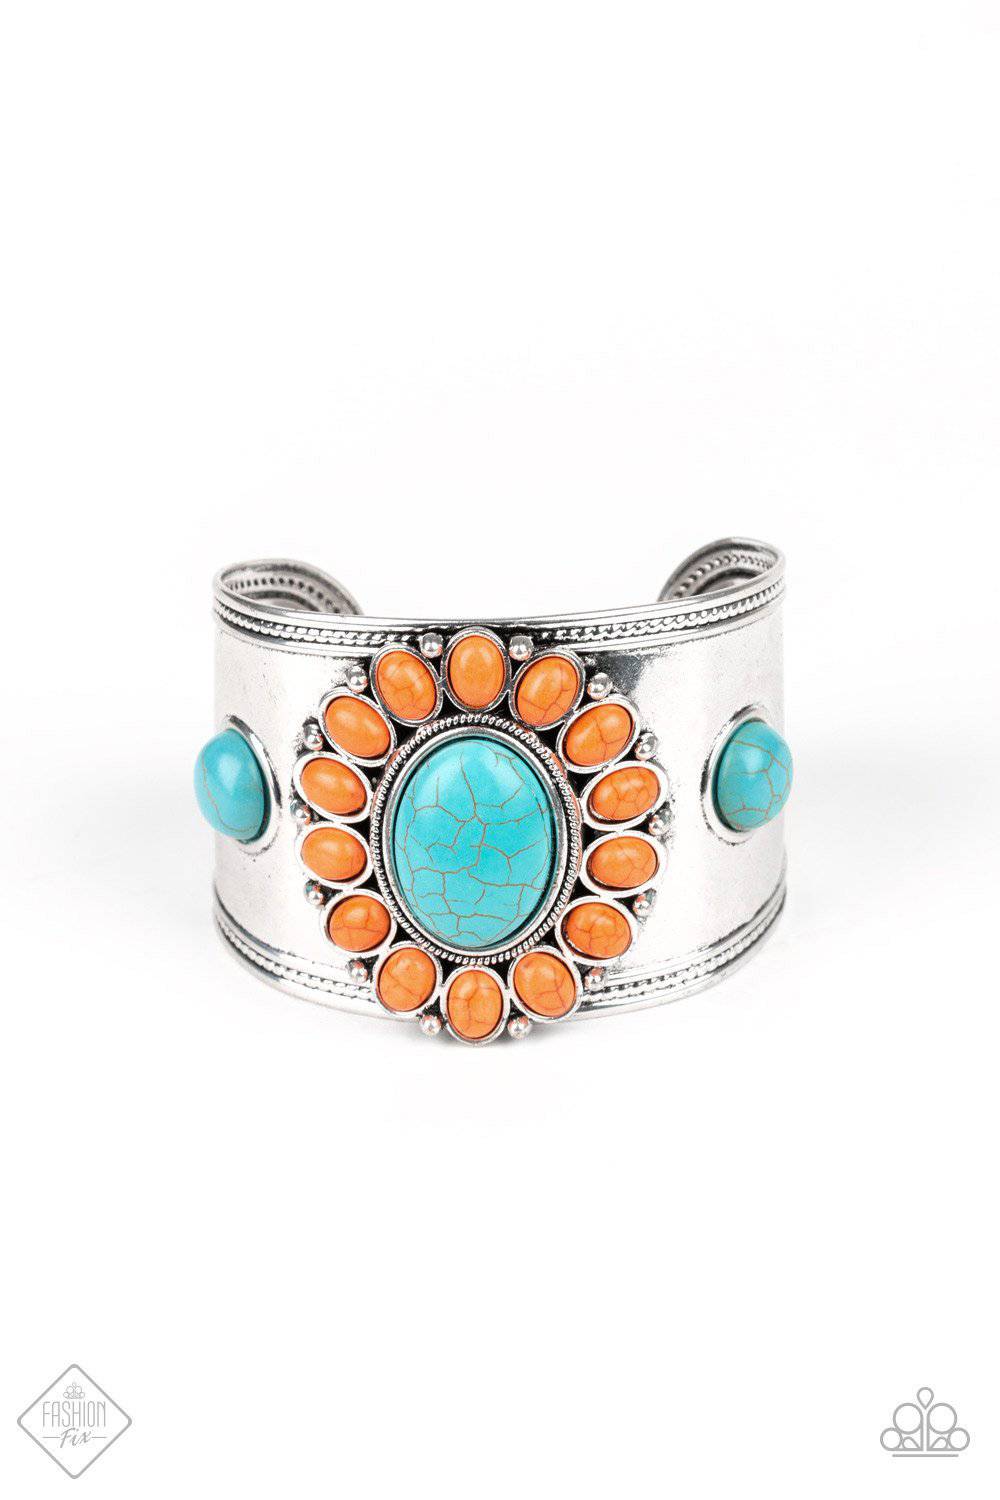 Room to Roam - Orange & Turquoise Cuff Bracelet - Paparazzi Accessories - GlaMarous Titi Jewels